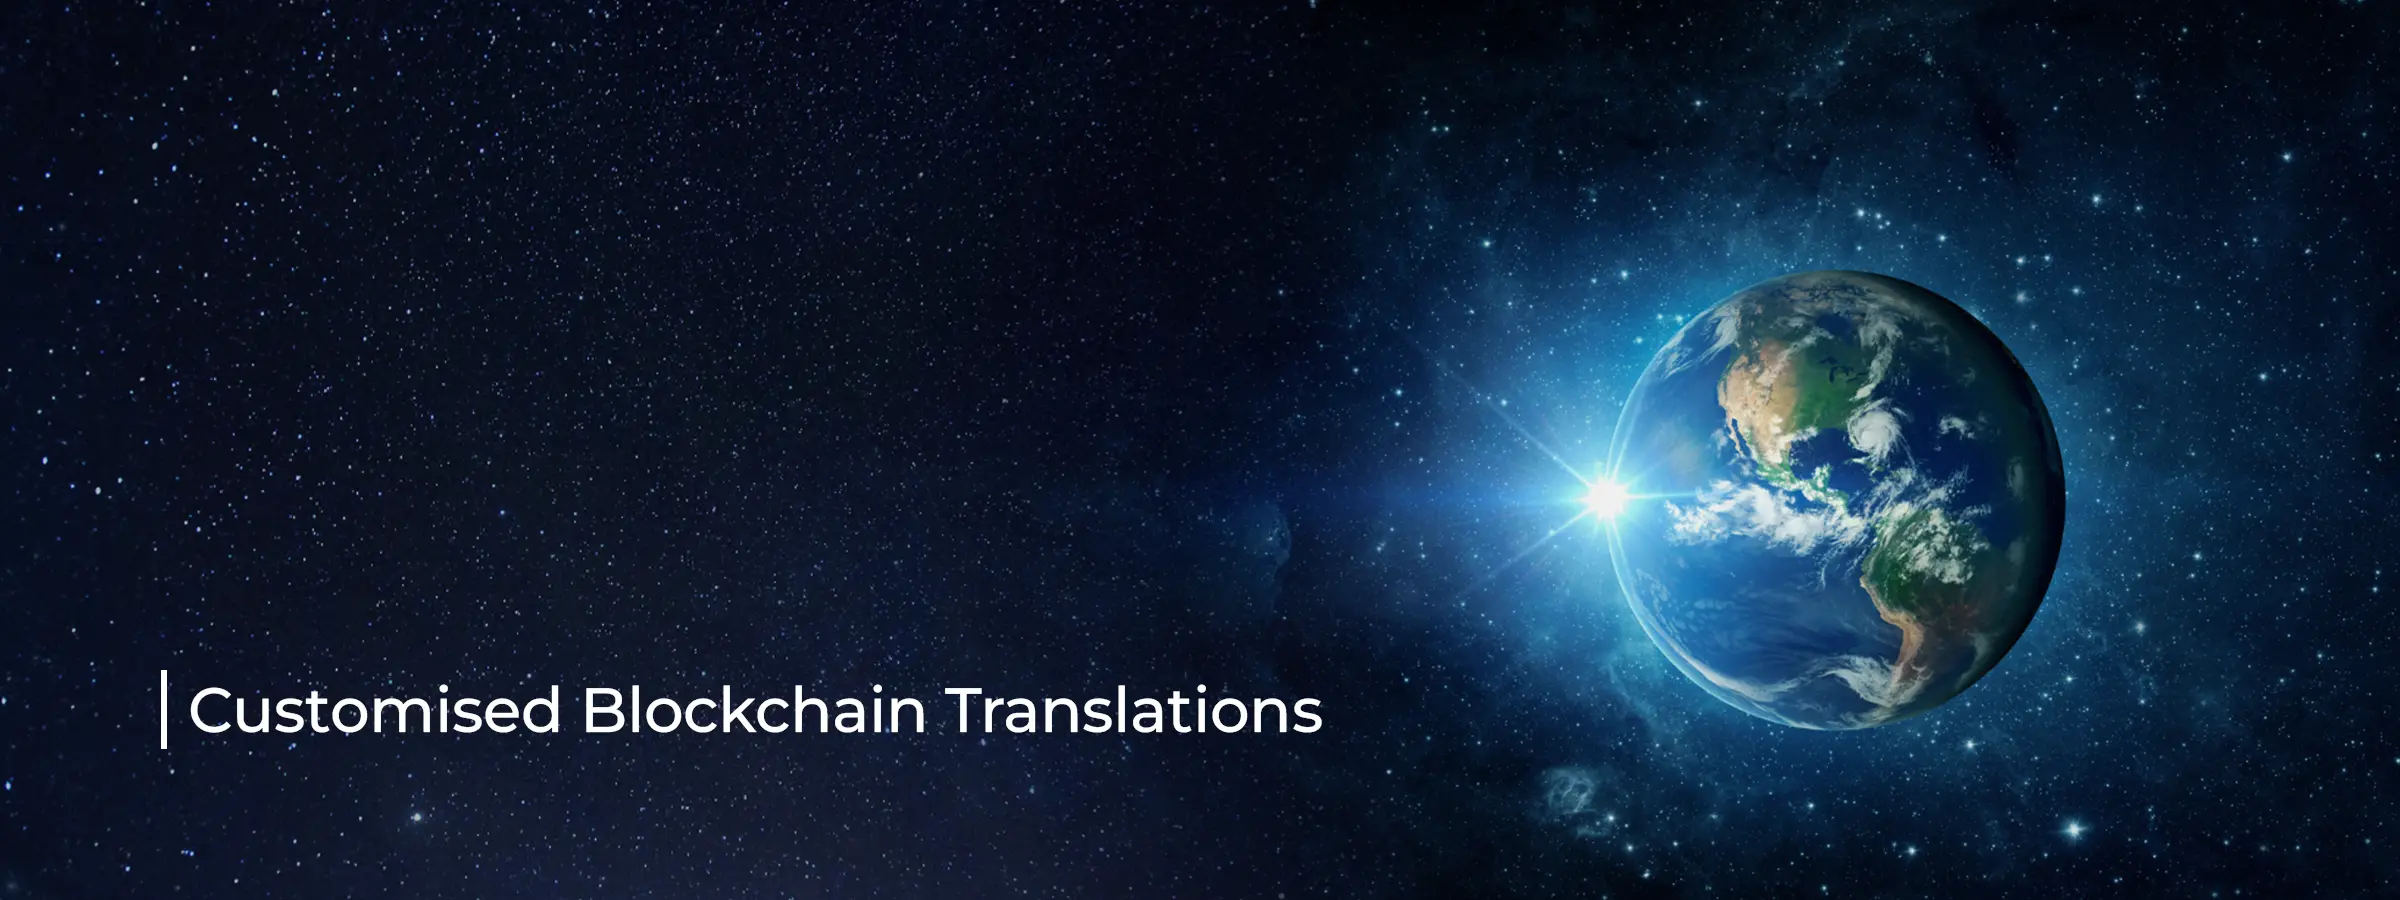 customised-blockchain-translations-industry-banner